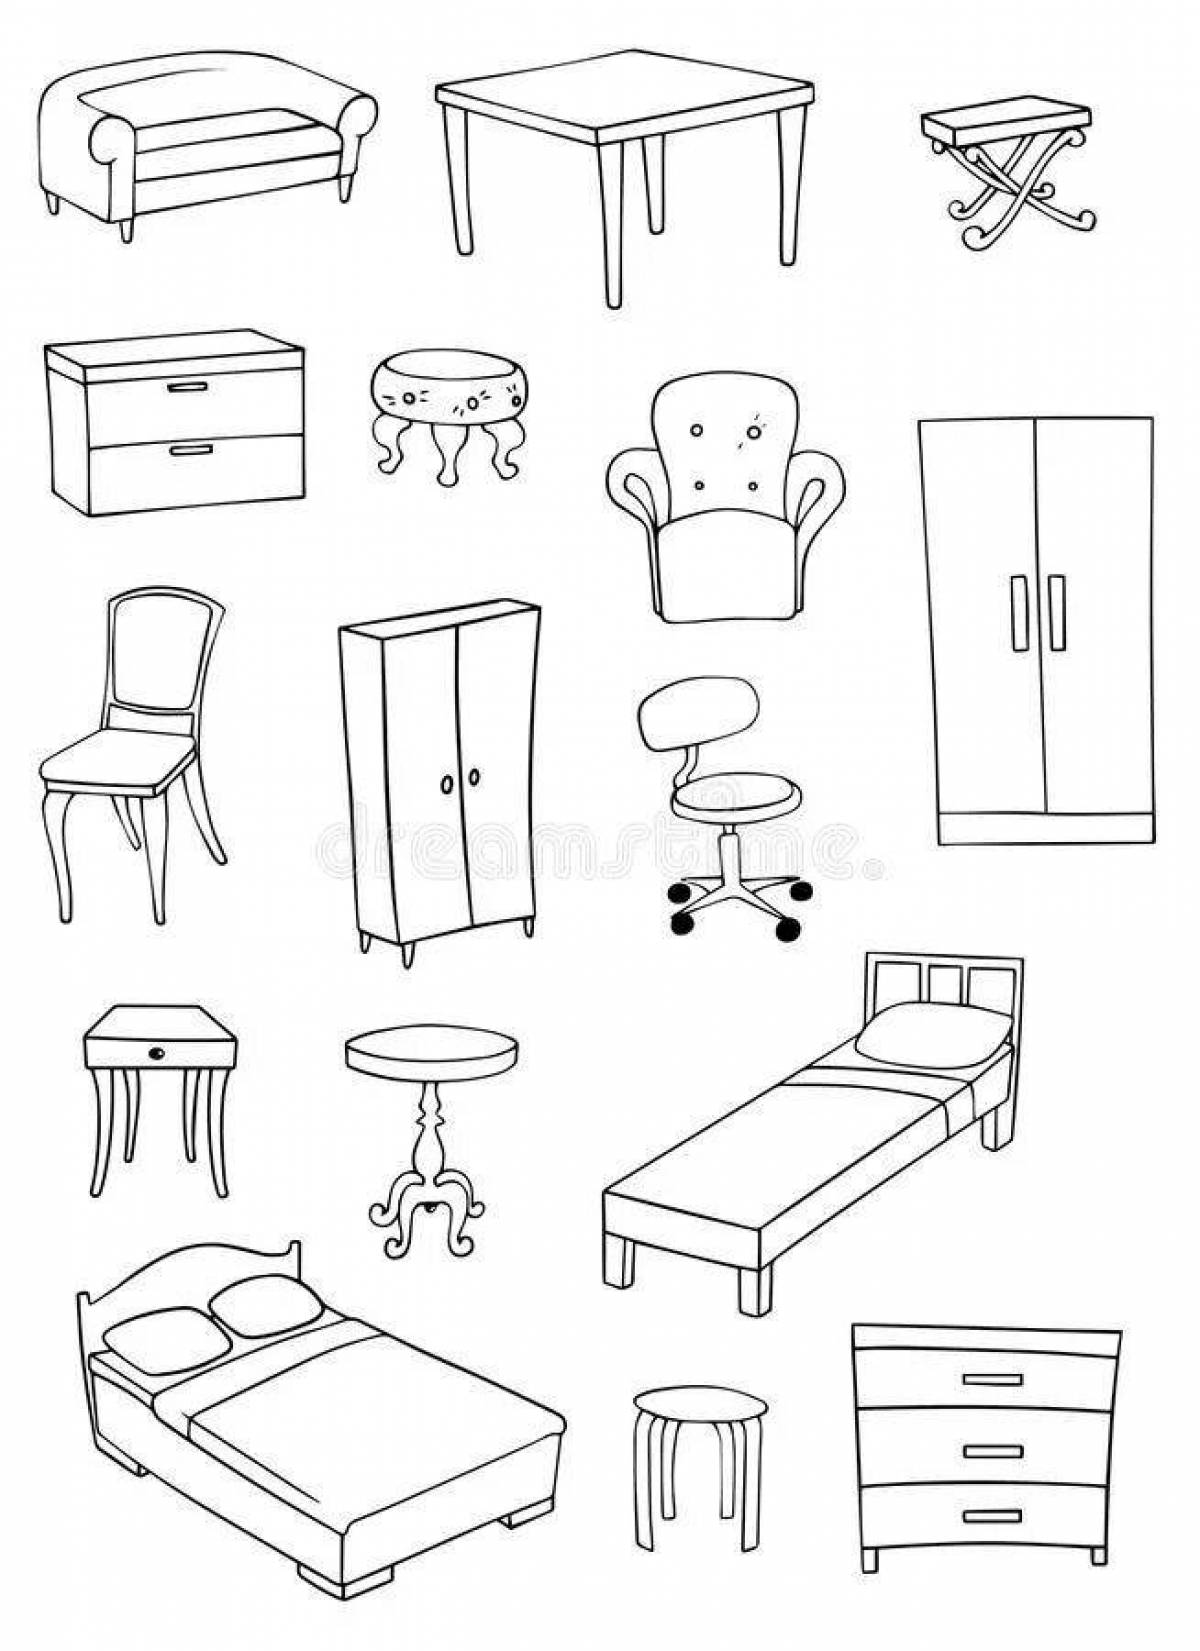 Cute tokoboko furniture coloring page